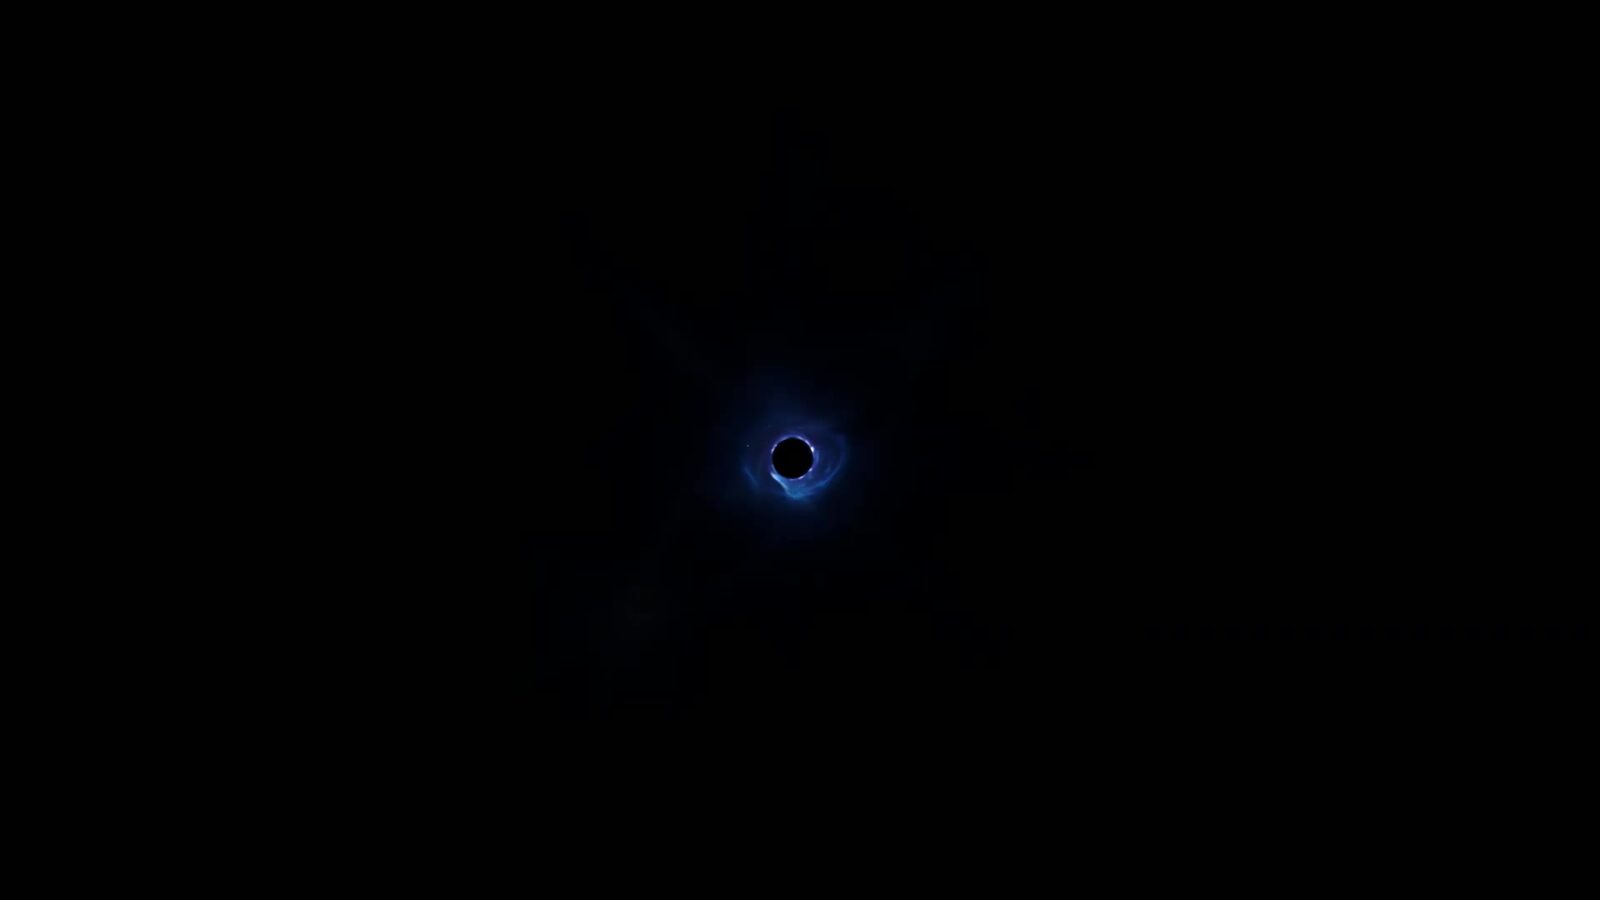 Black Hole Fortnite Game - Free Live Wallpaper - Live ... - 1920 x 1080 jpeg 34kB